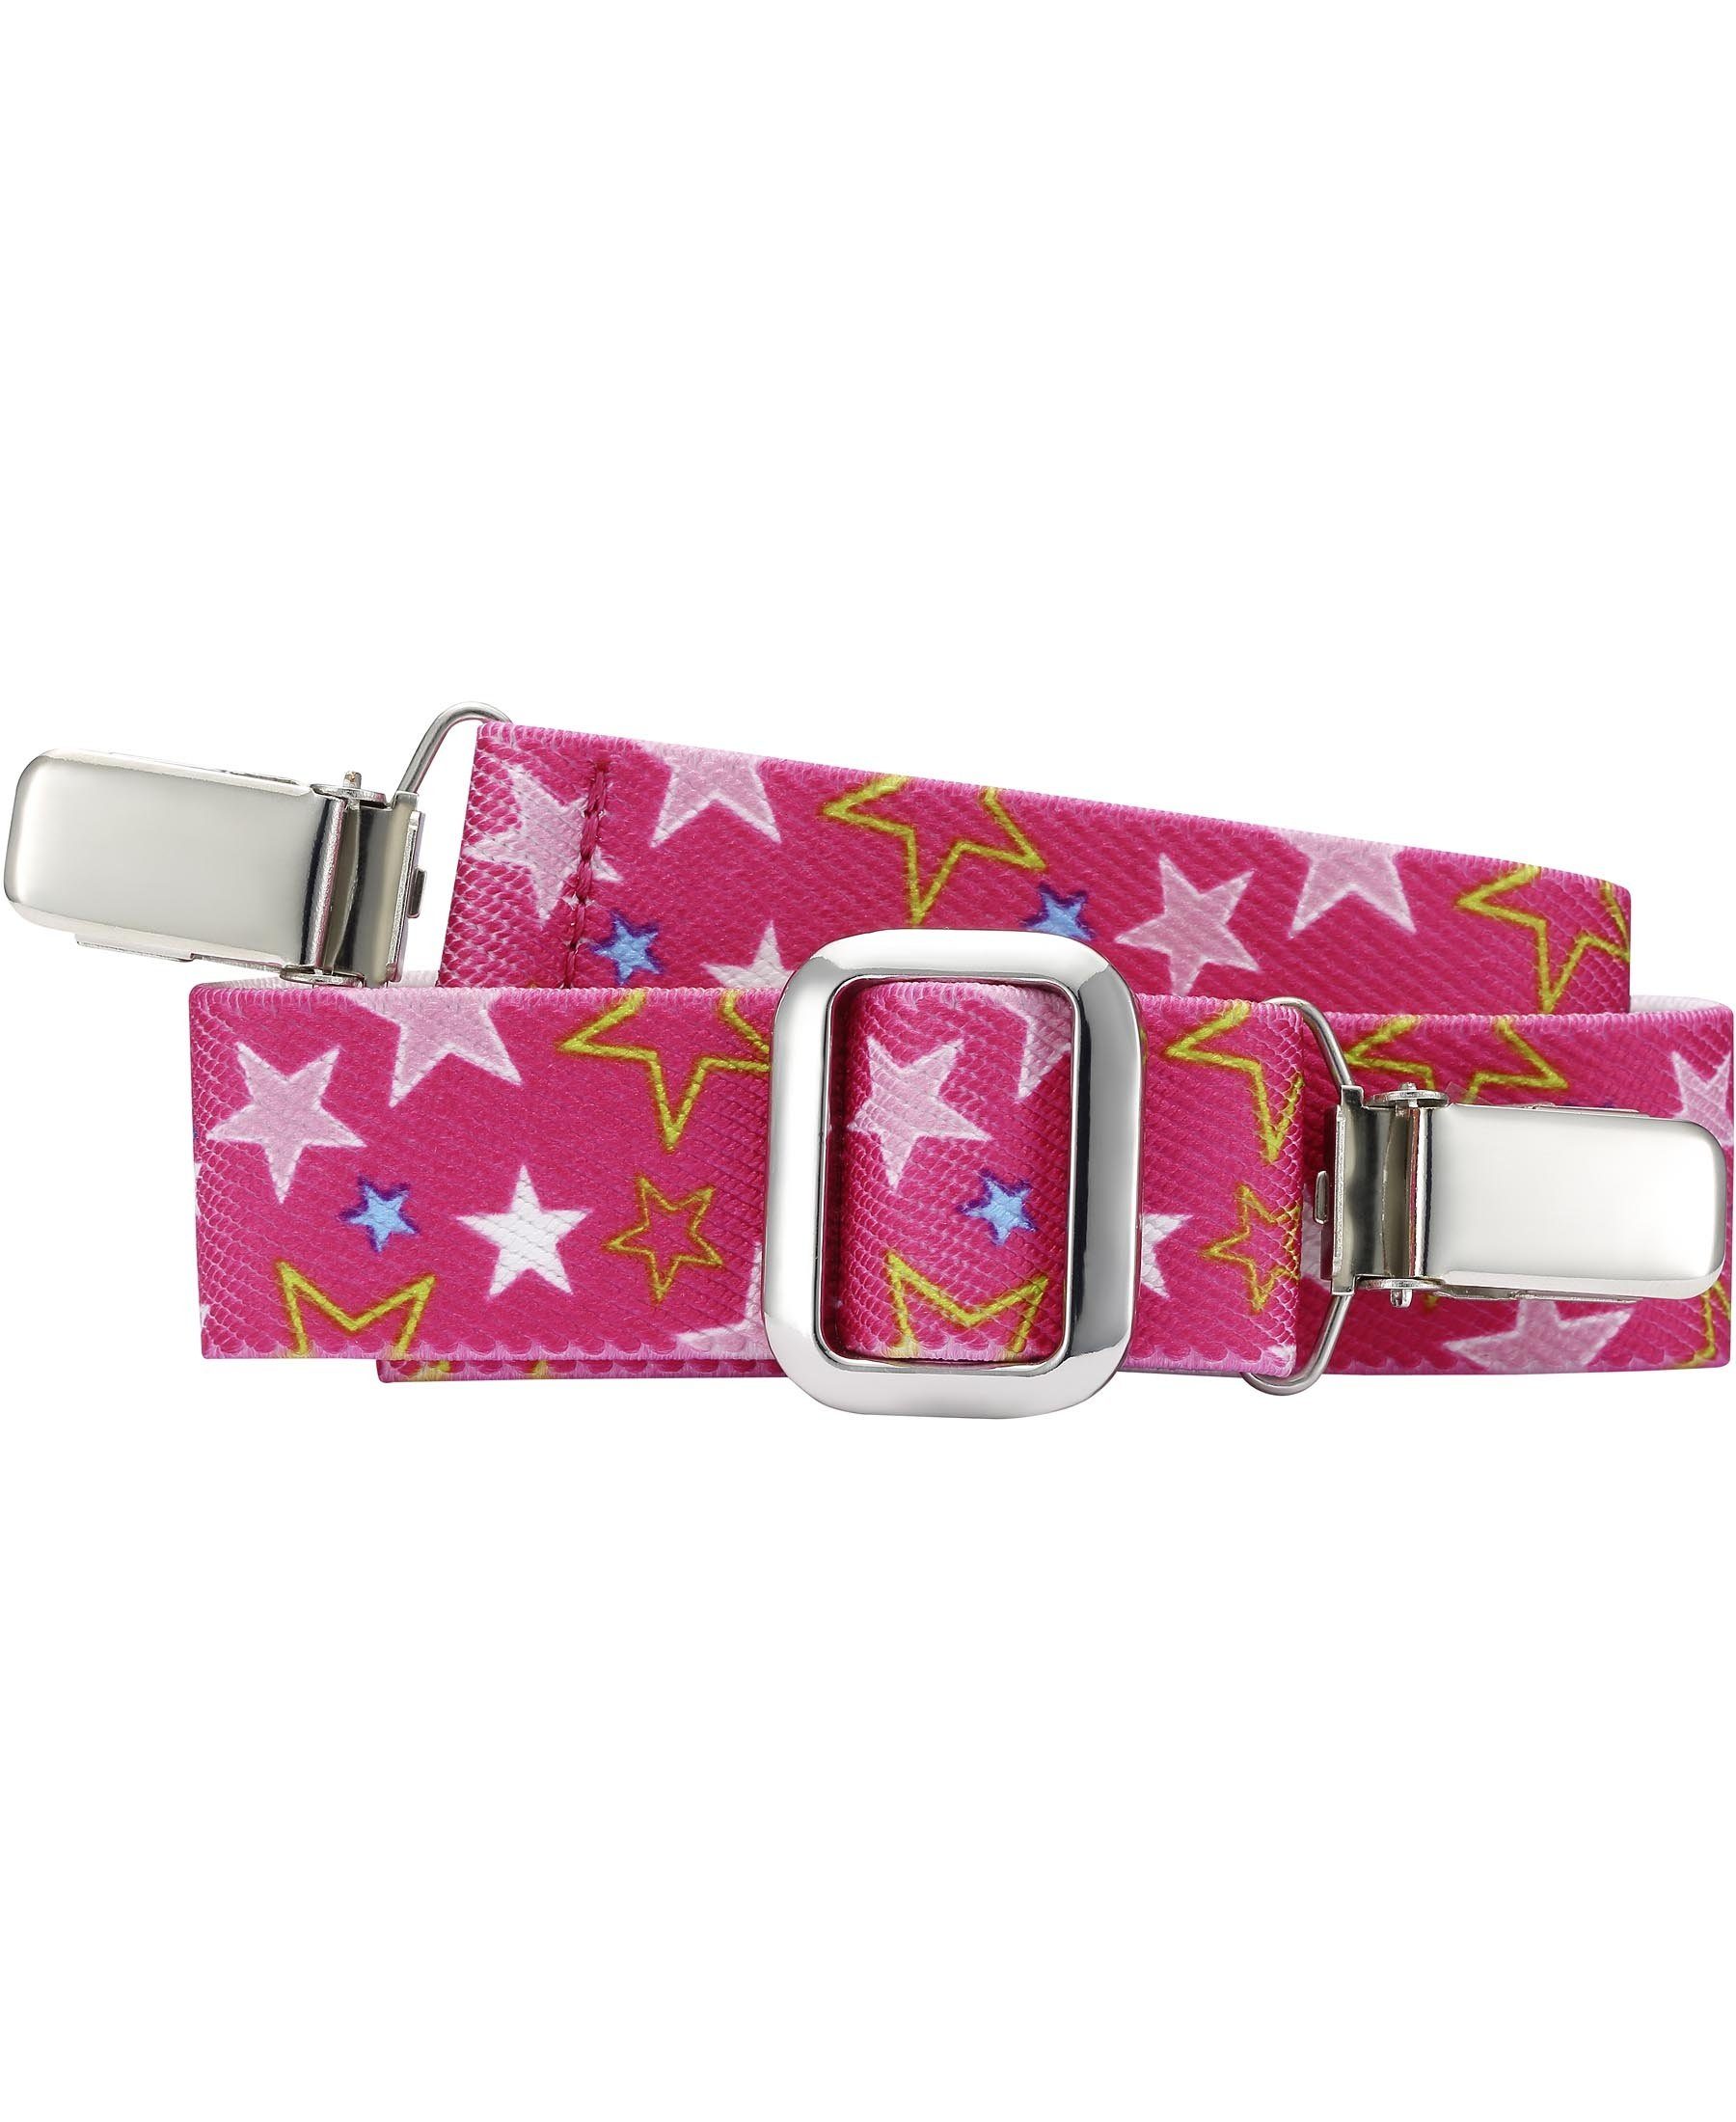 Playshoes Sterne pink Taillengürtel Elastik-Gürtel Clip